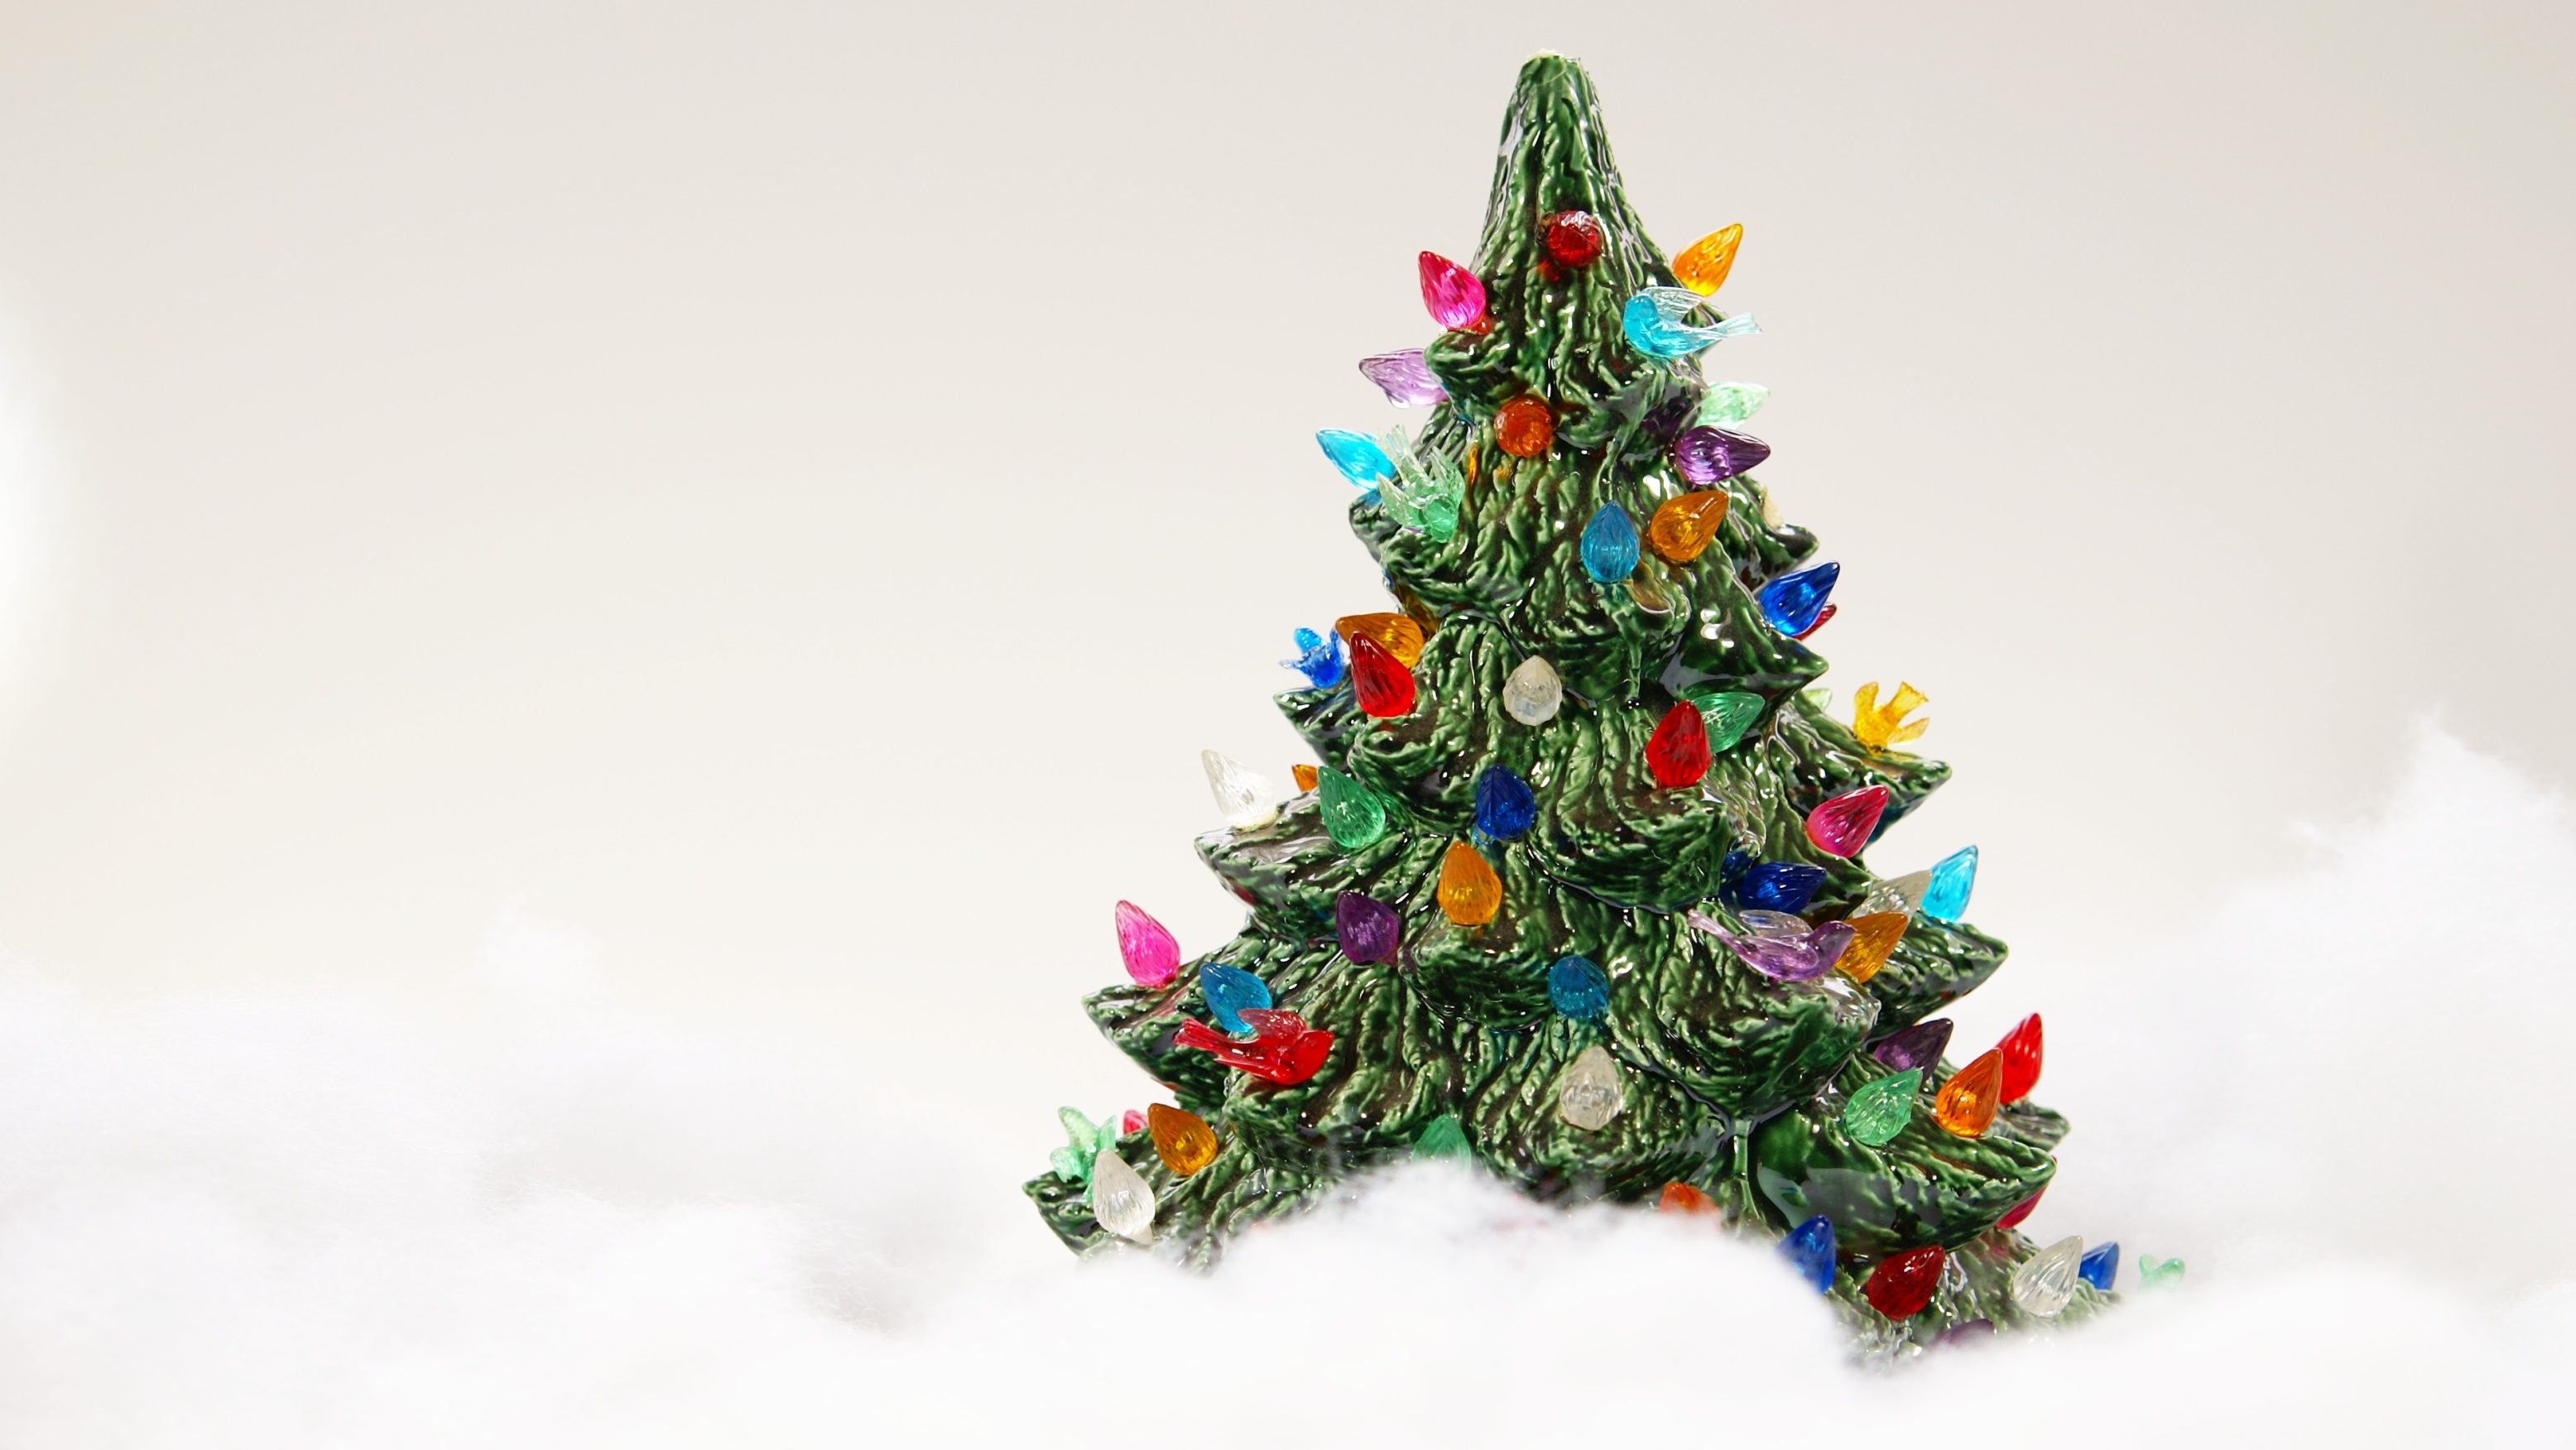 Ceramic Christmas tree surrounded by fake snow